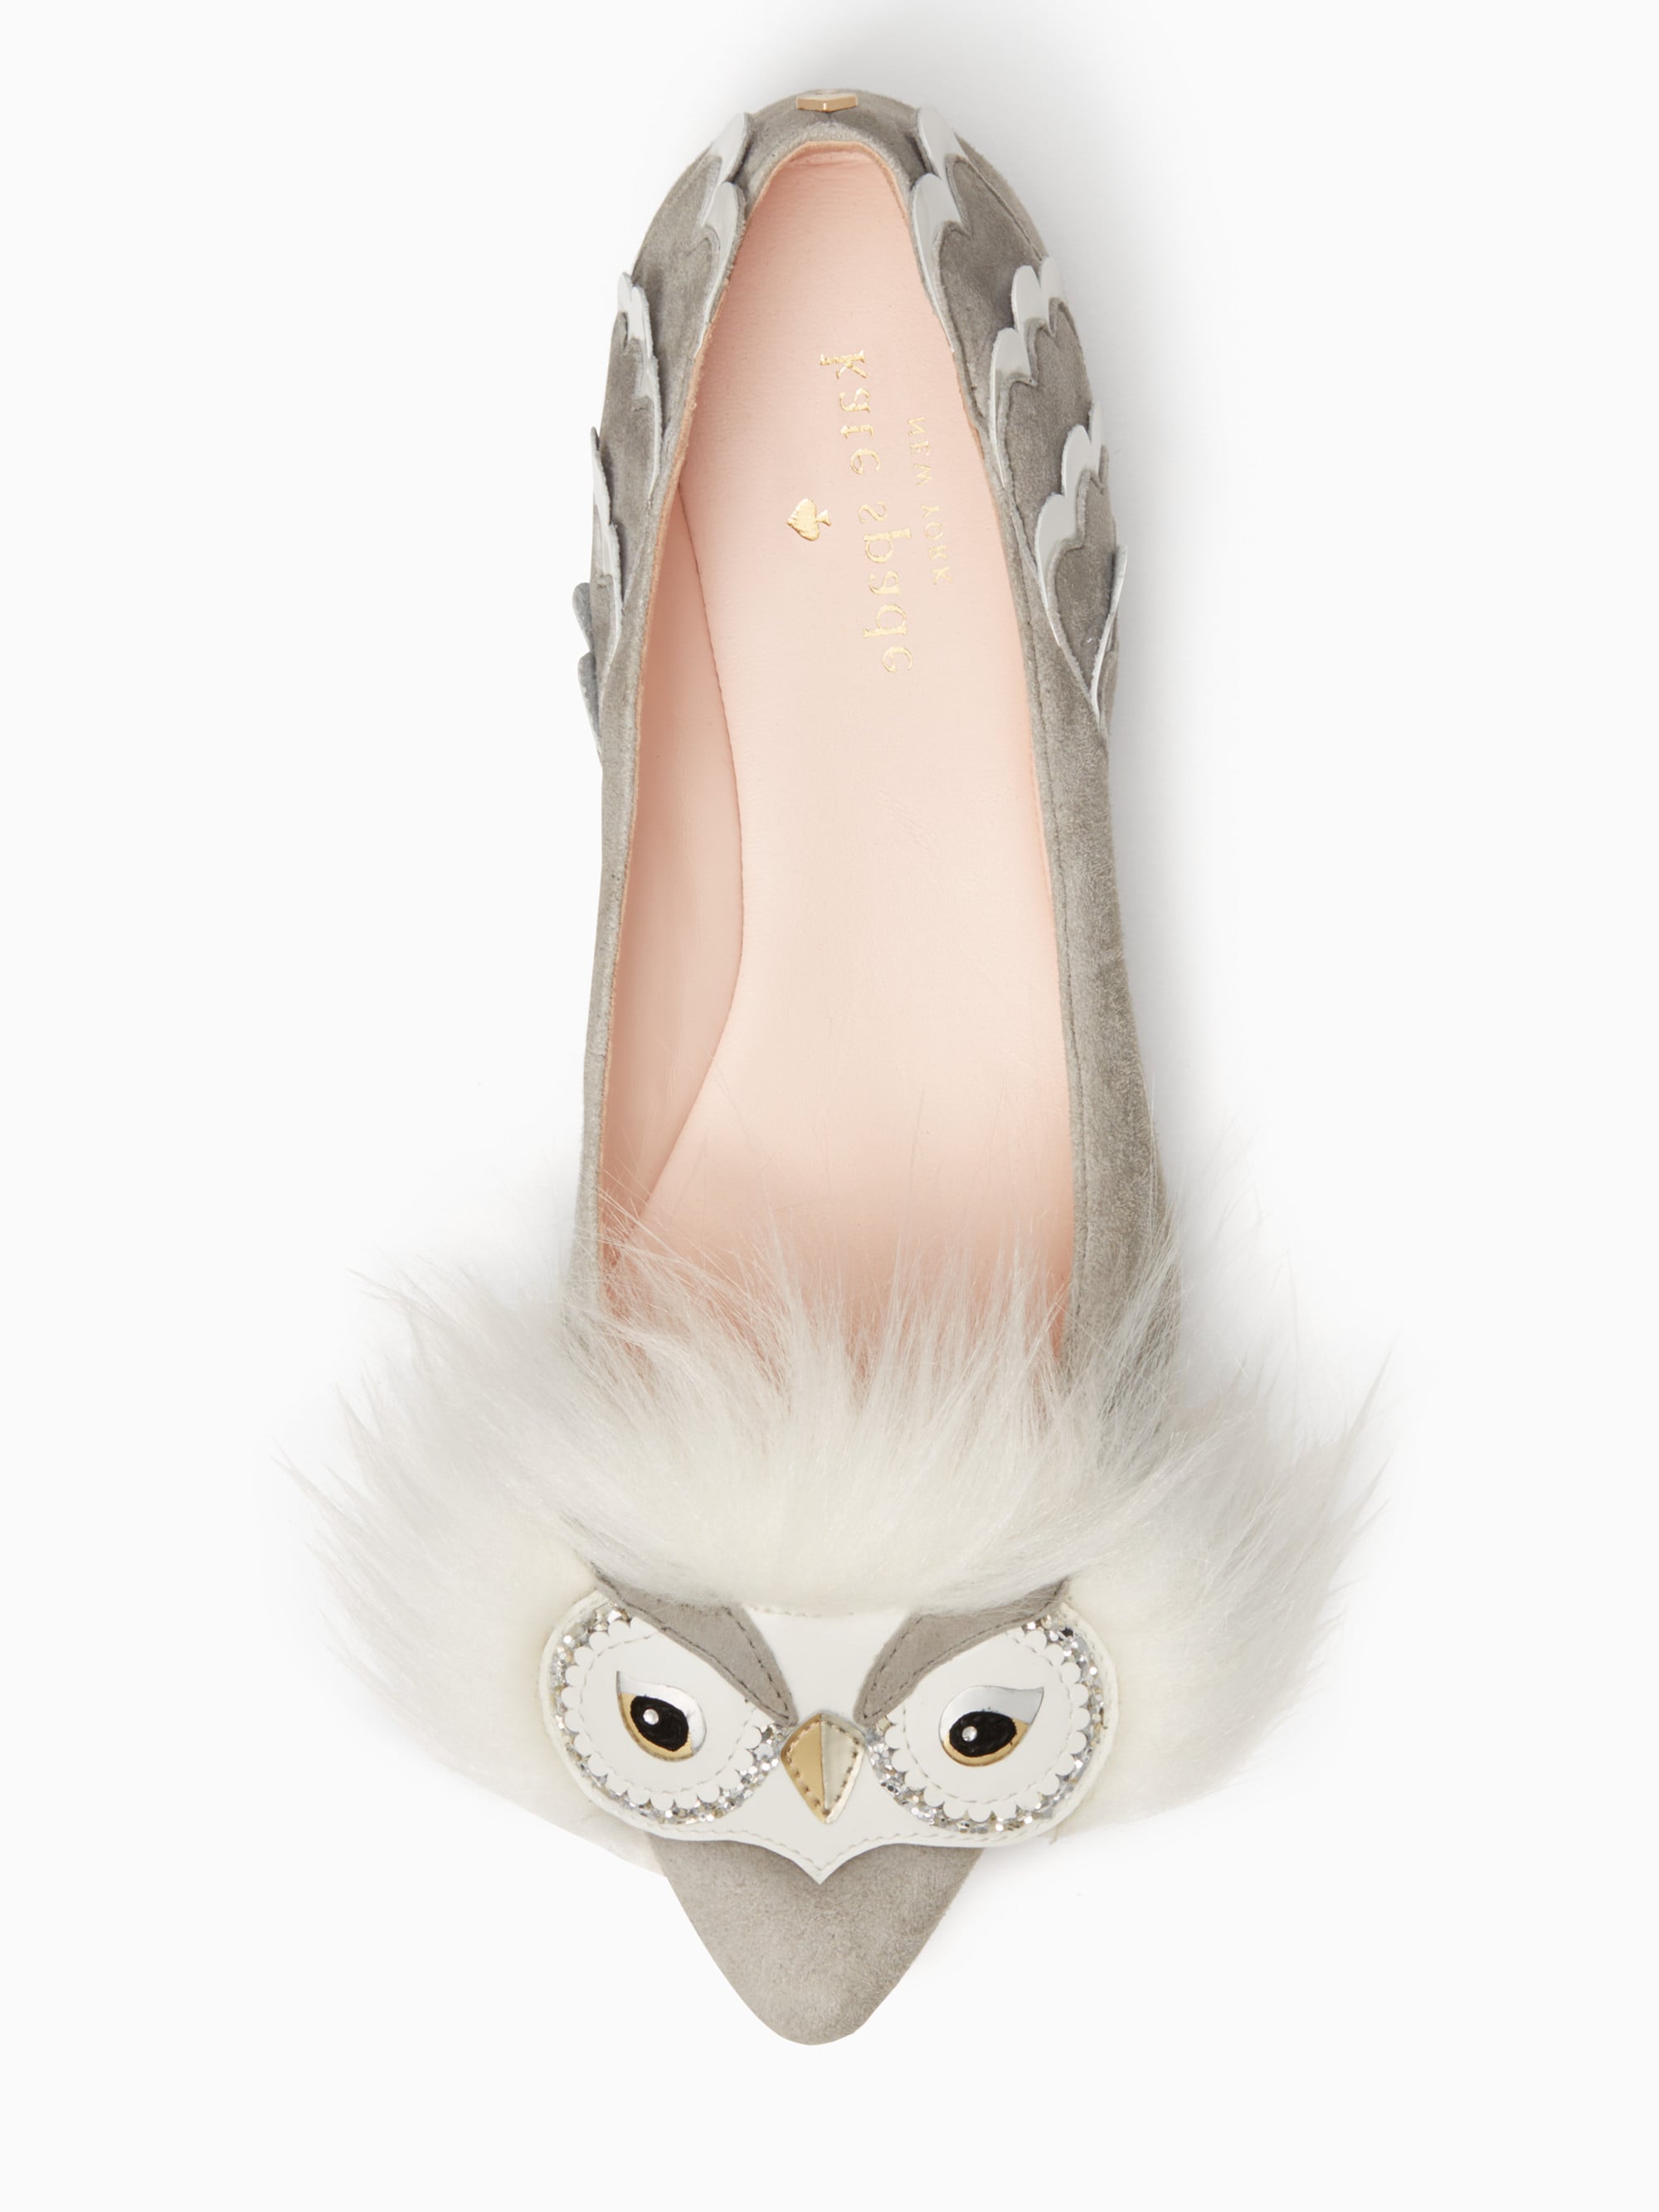 Kate Spade Owl Flats | POPSUGAR Fashion